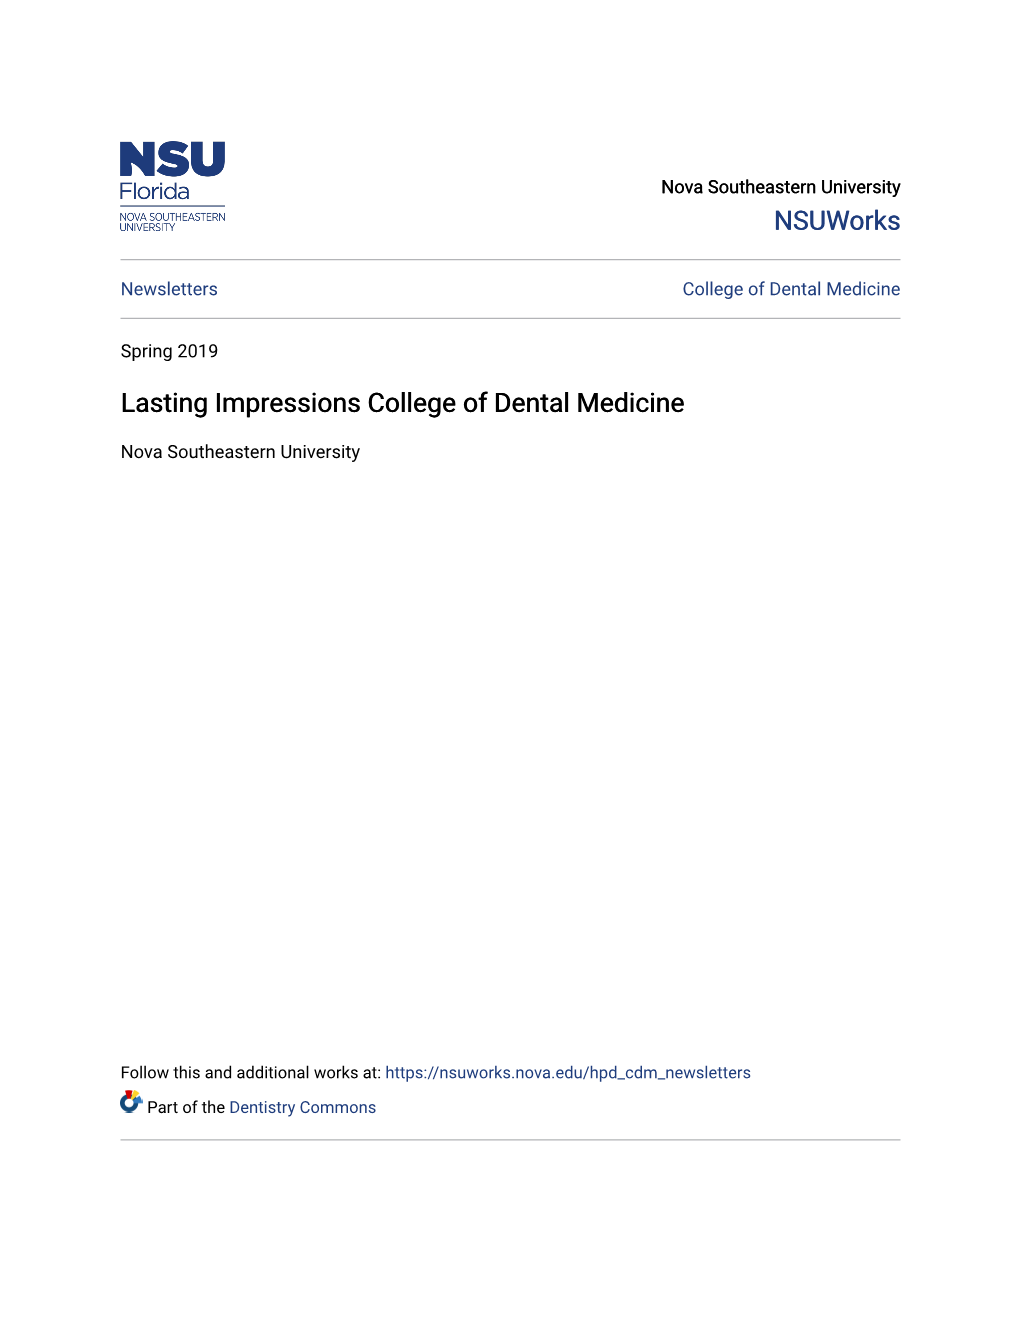 Lasting Impressions College of Dental Medicine